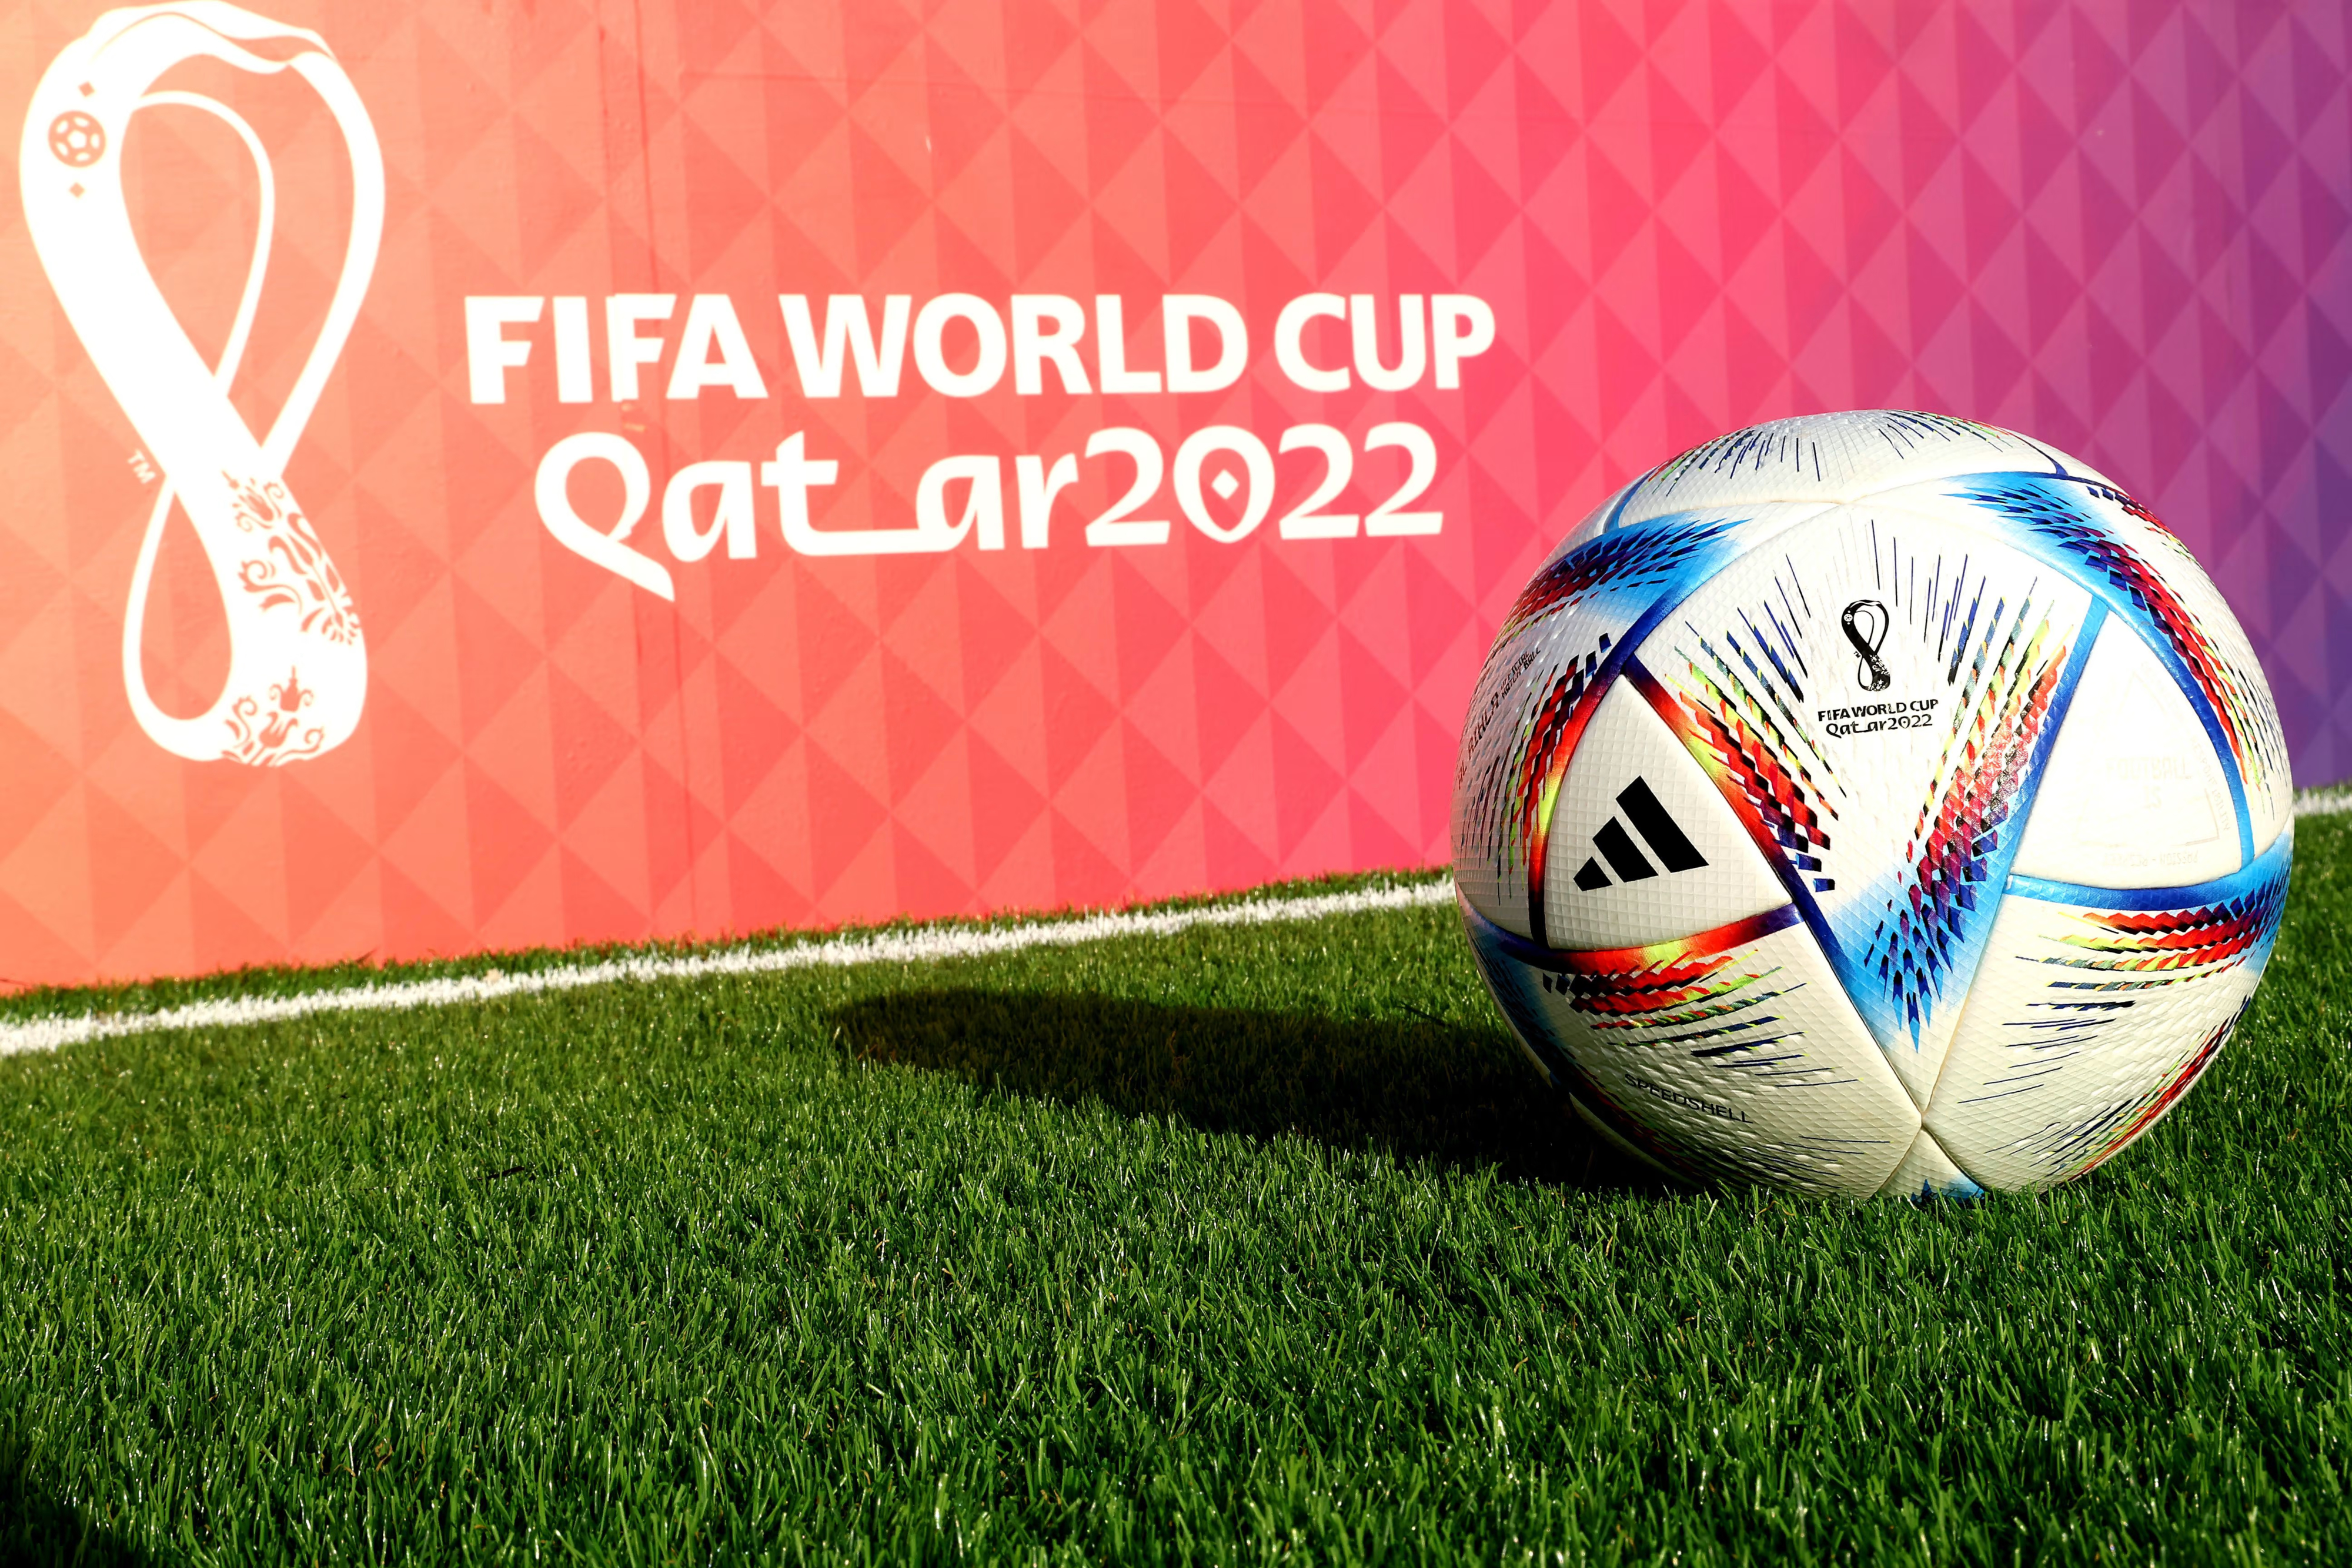 Чемпионат fifa. Мяч ФИФА 2022 Катар. Мяч ЧМ 2022 В Катаре. FIFA World Cup 2022 мяч. ФИФА ворлд кап Катар 2022.